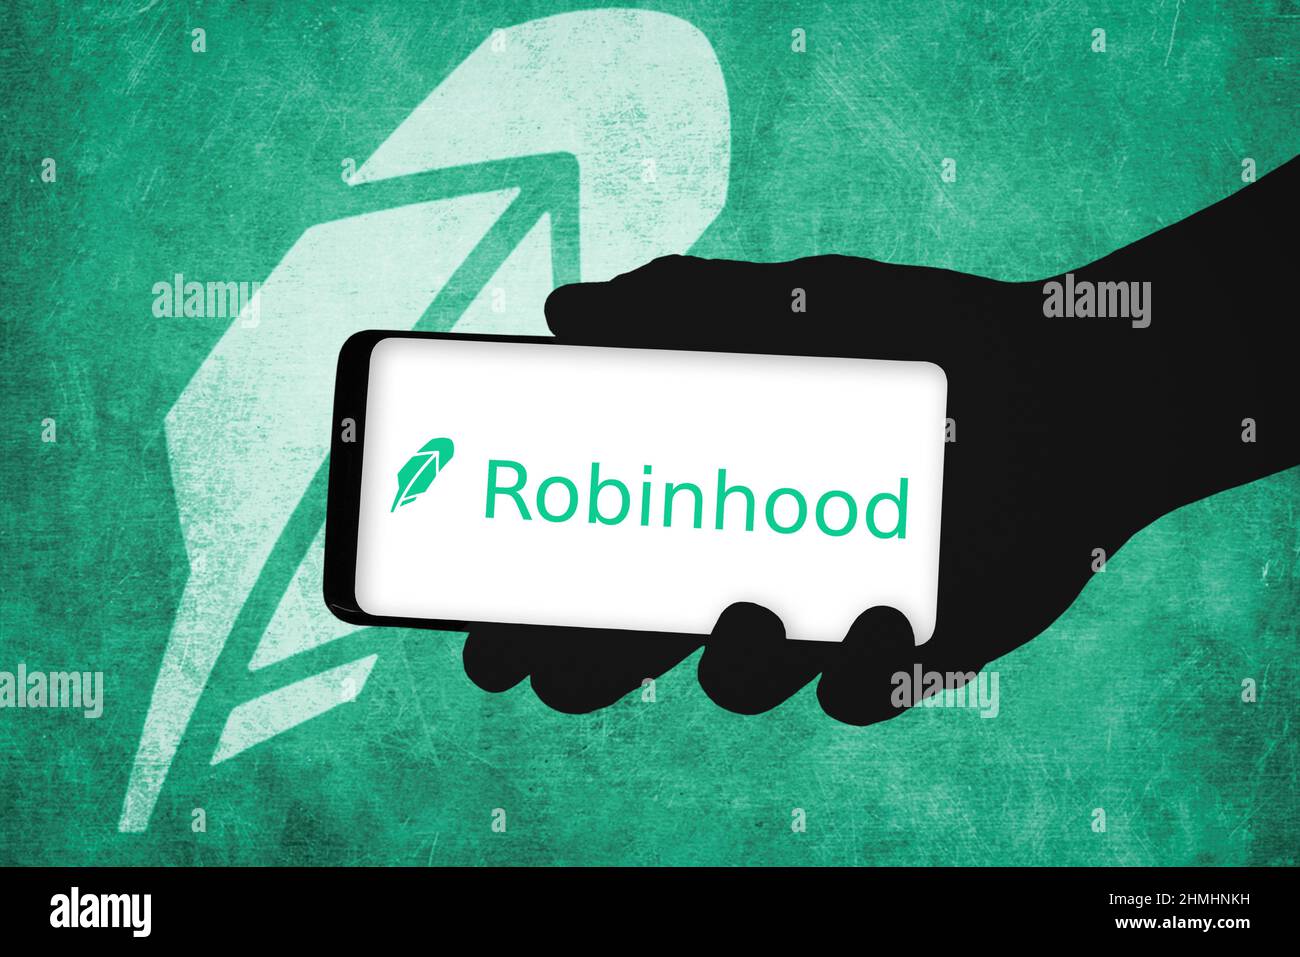 Robinhood Stock Photo